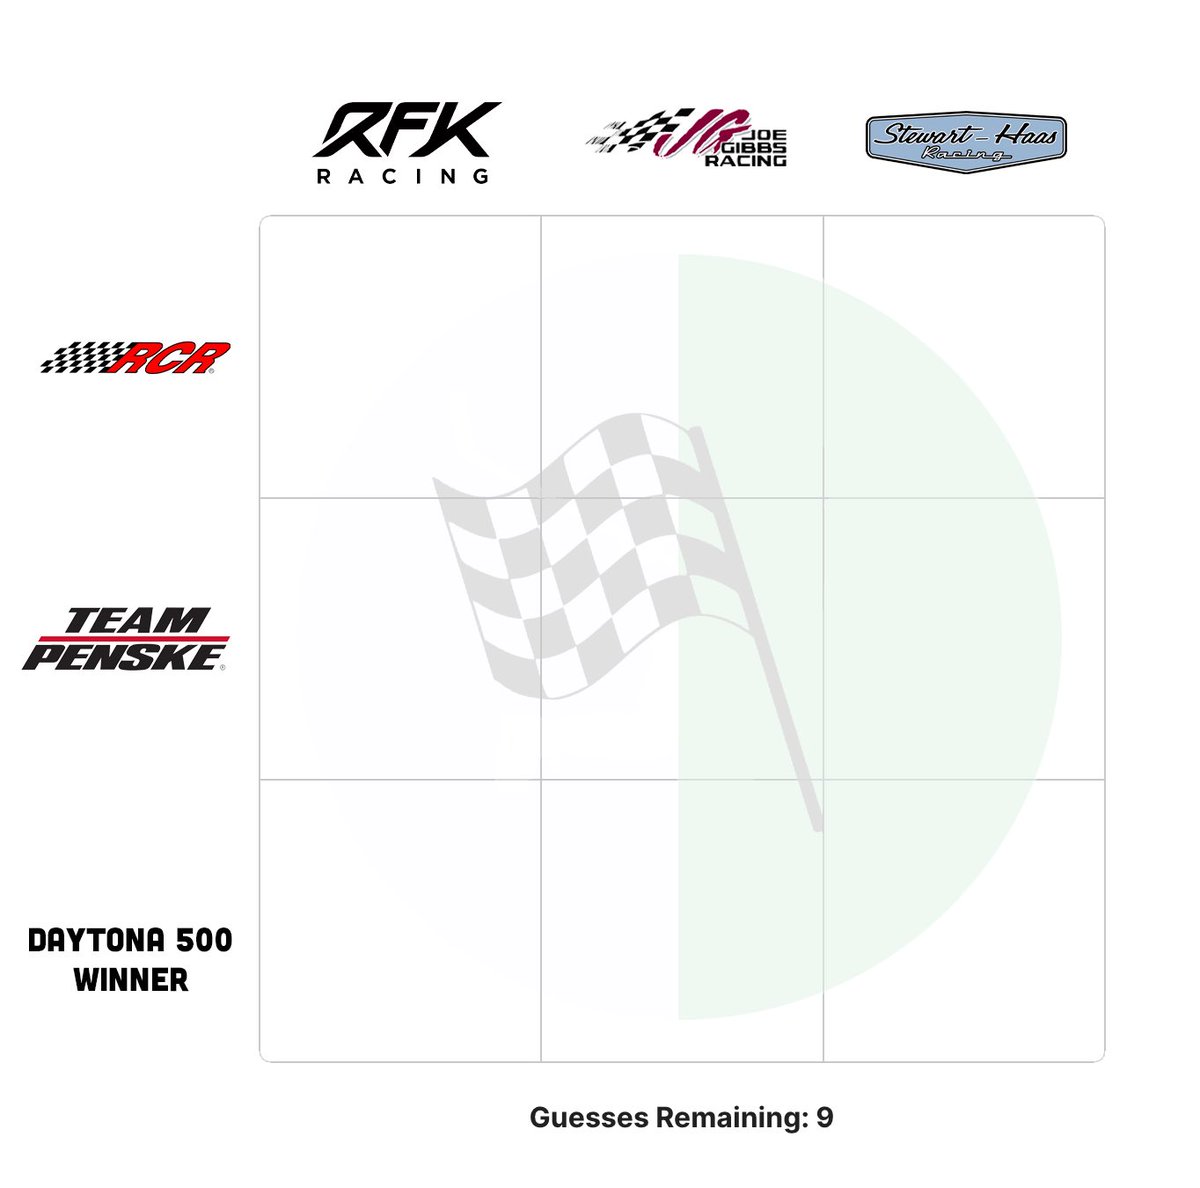 RT @rubbinisracing: Immaculate grid. NASCAR edition https://t.co/konMr5llGm